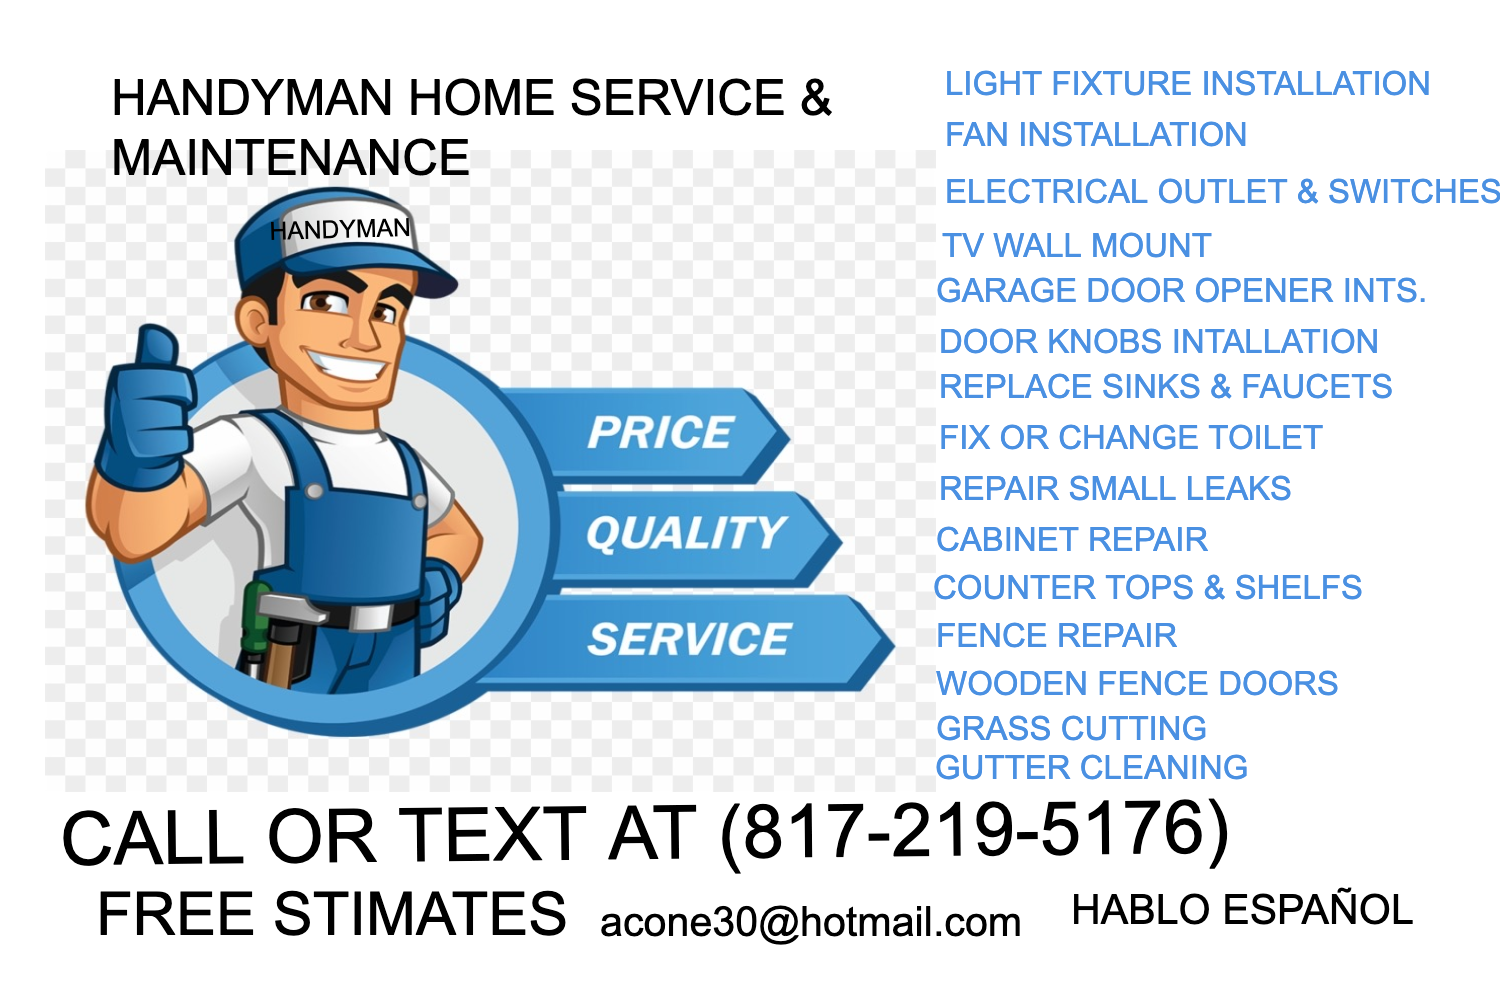 Home Services: Installation & Handyman Services